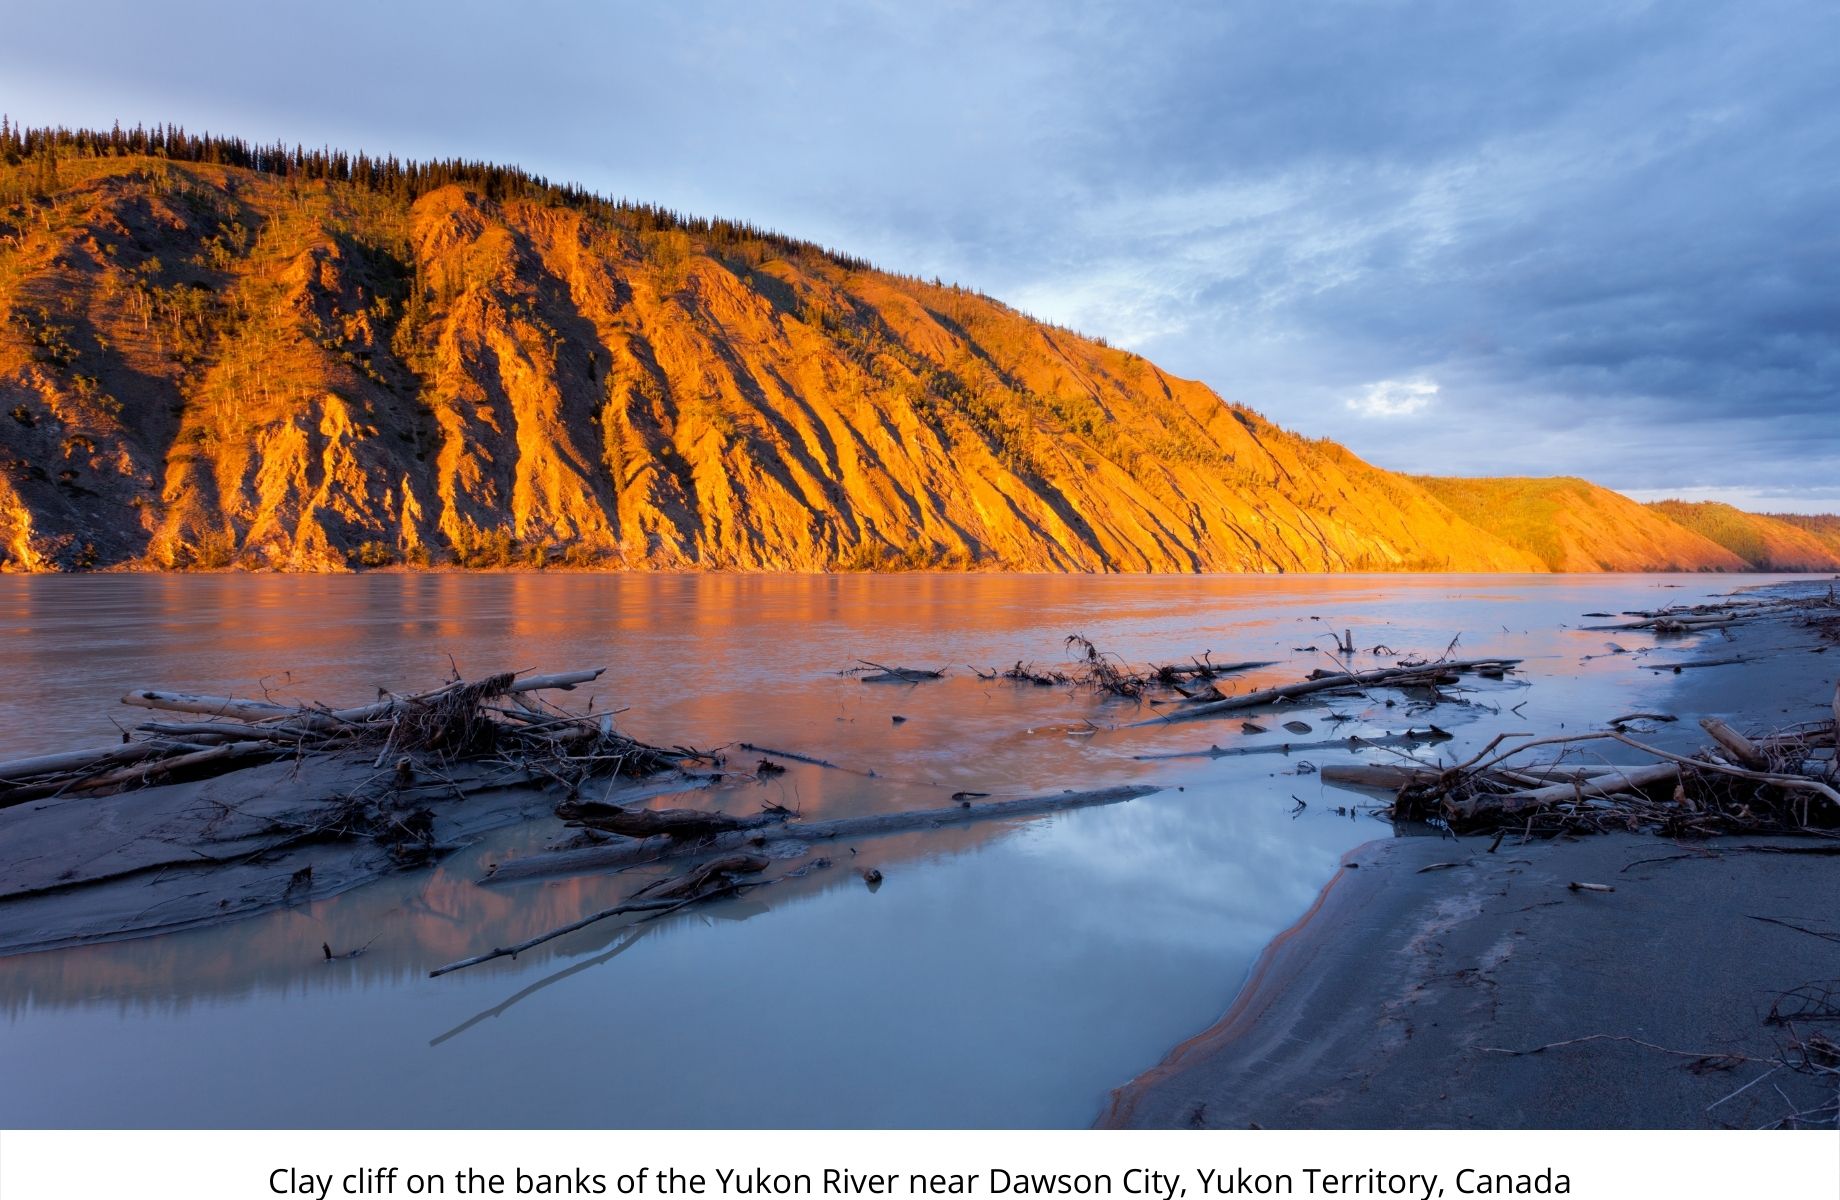 Clay cliff on the banks of the Yukon River near Dawson Citv, Yukon Territory, Canada